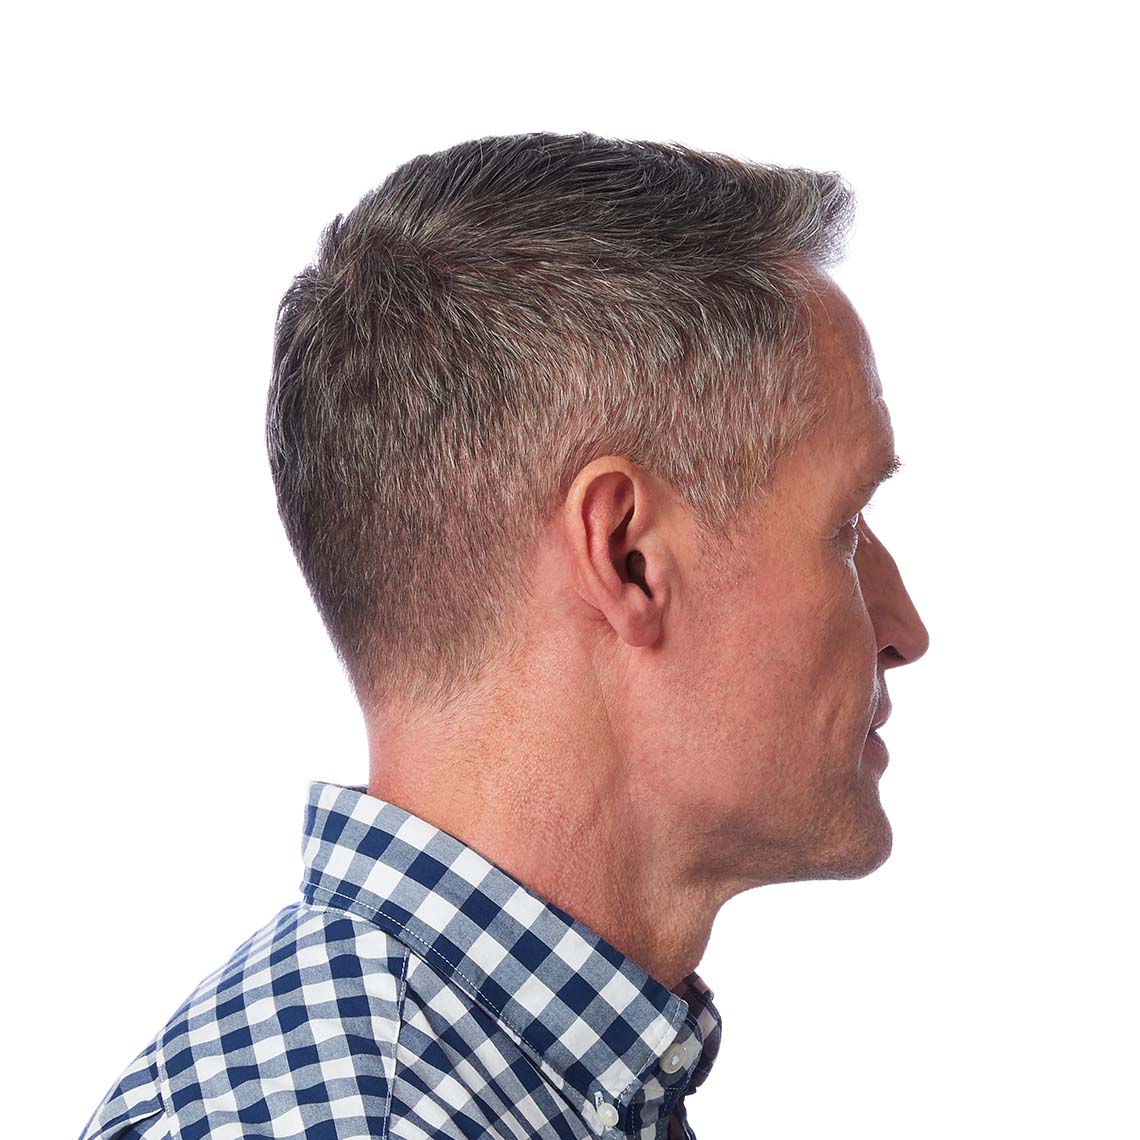 An CIC non-wireless hearing aid shown in a man's ear